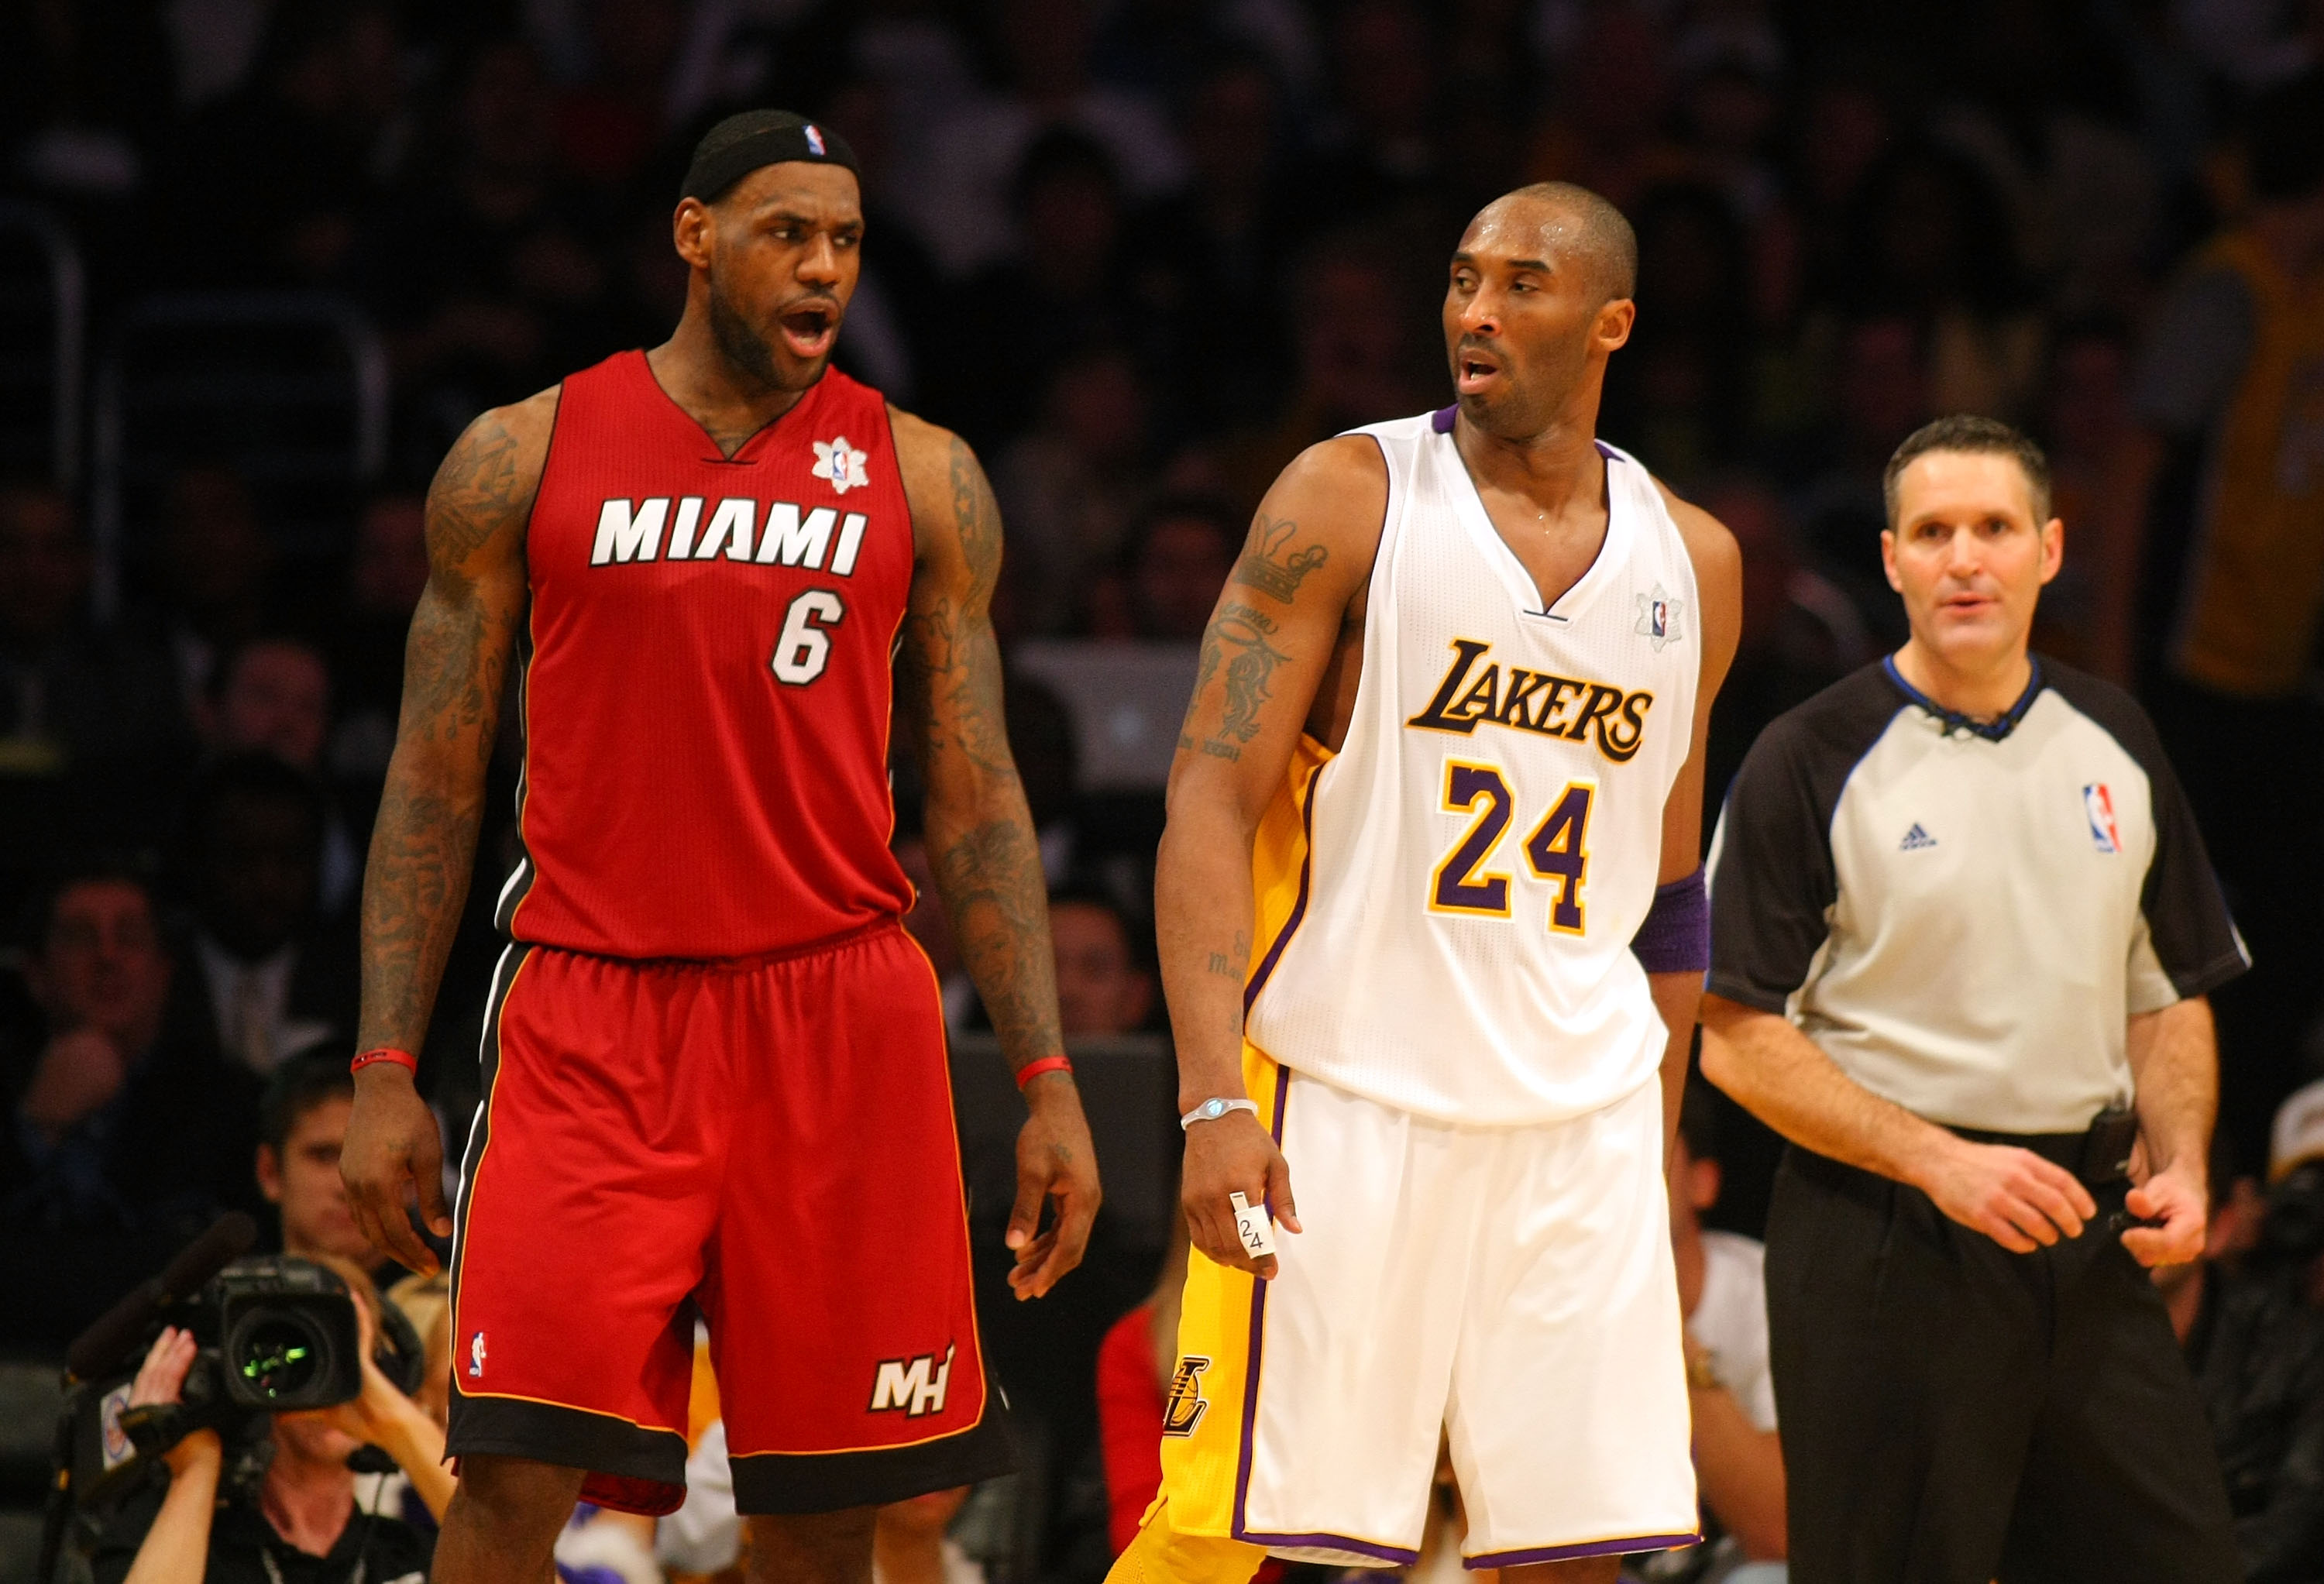 Kobe Bryant Vs. LeBron James: Who's the More Dominant NBA Superstar